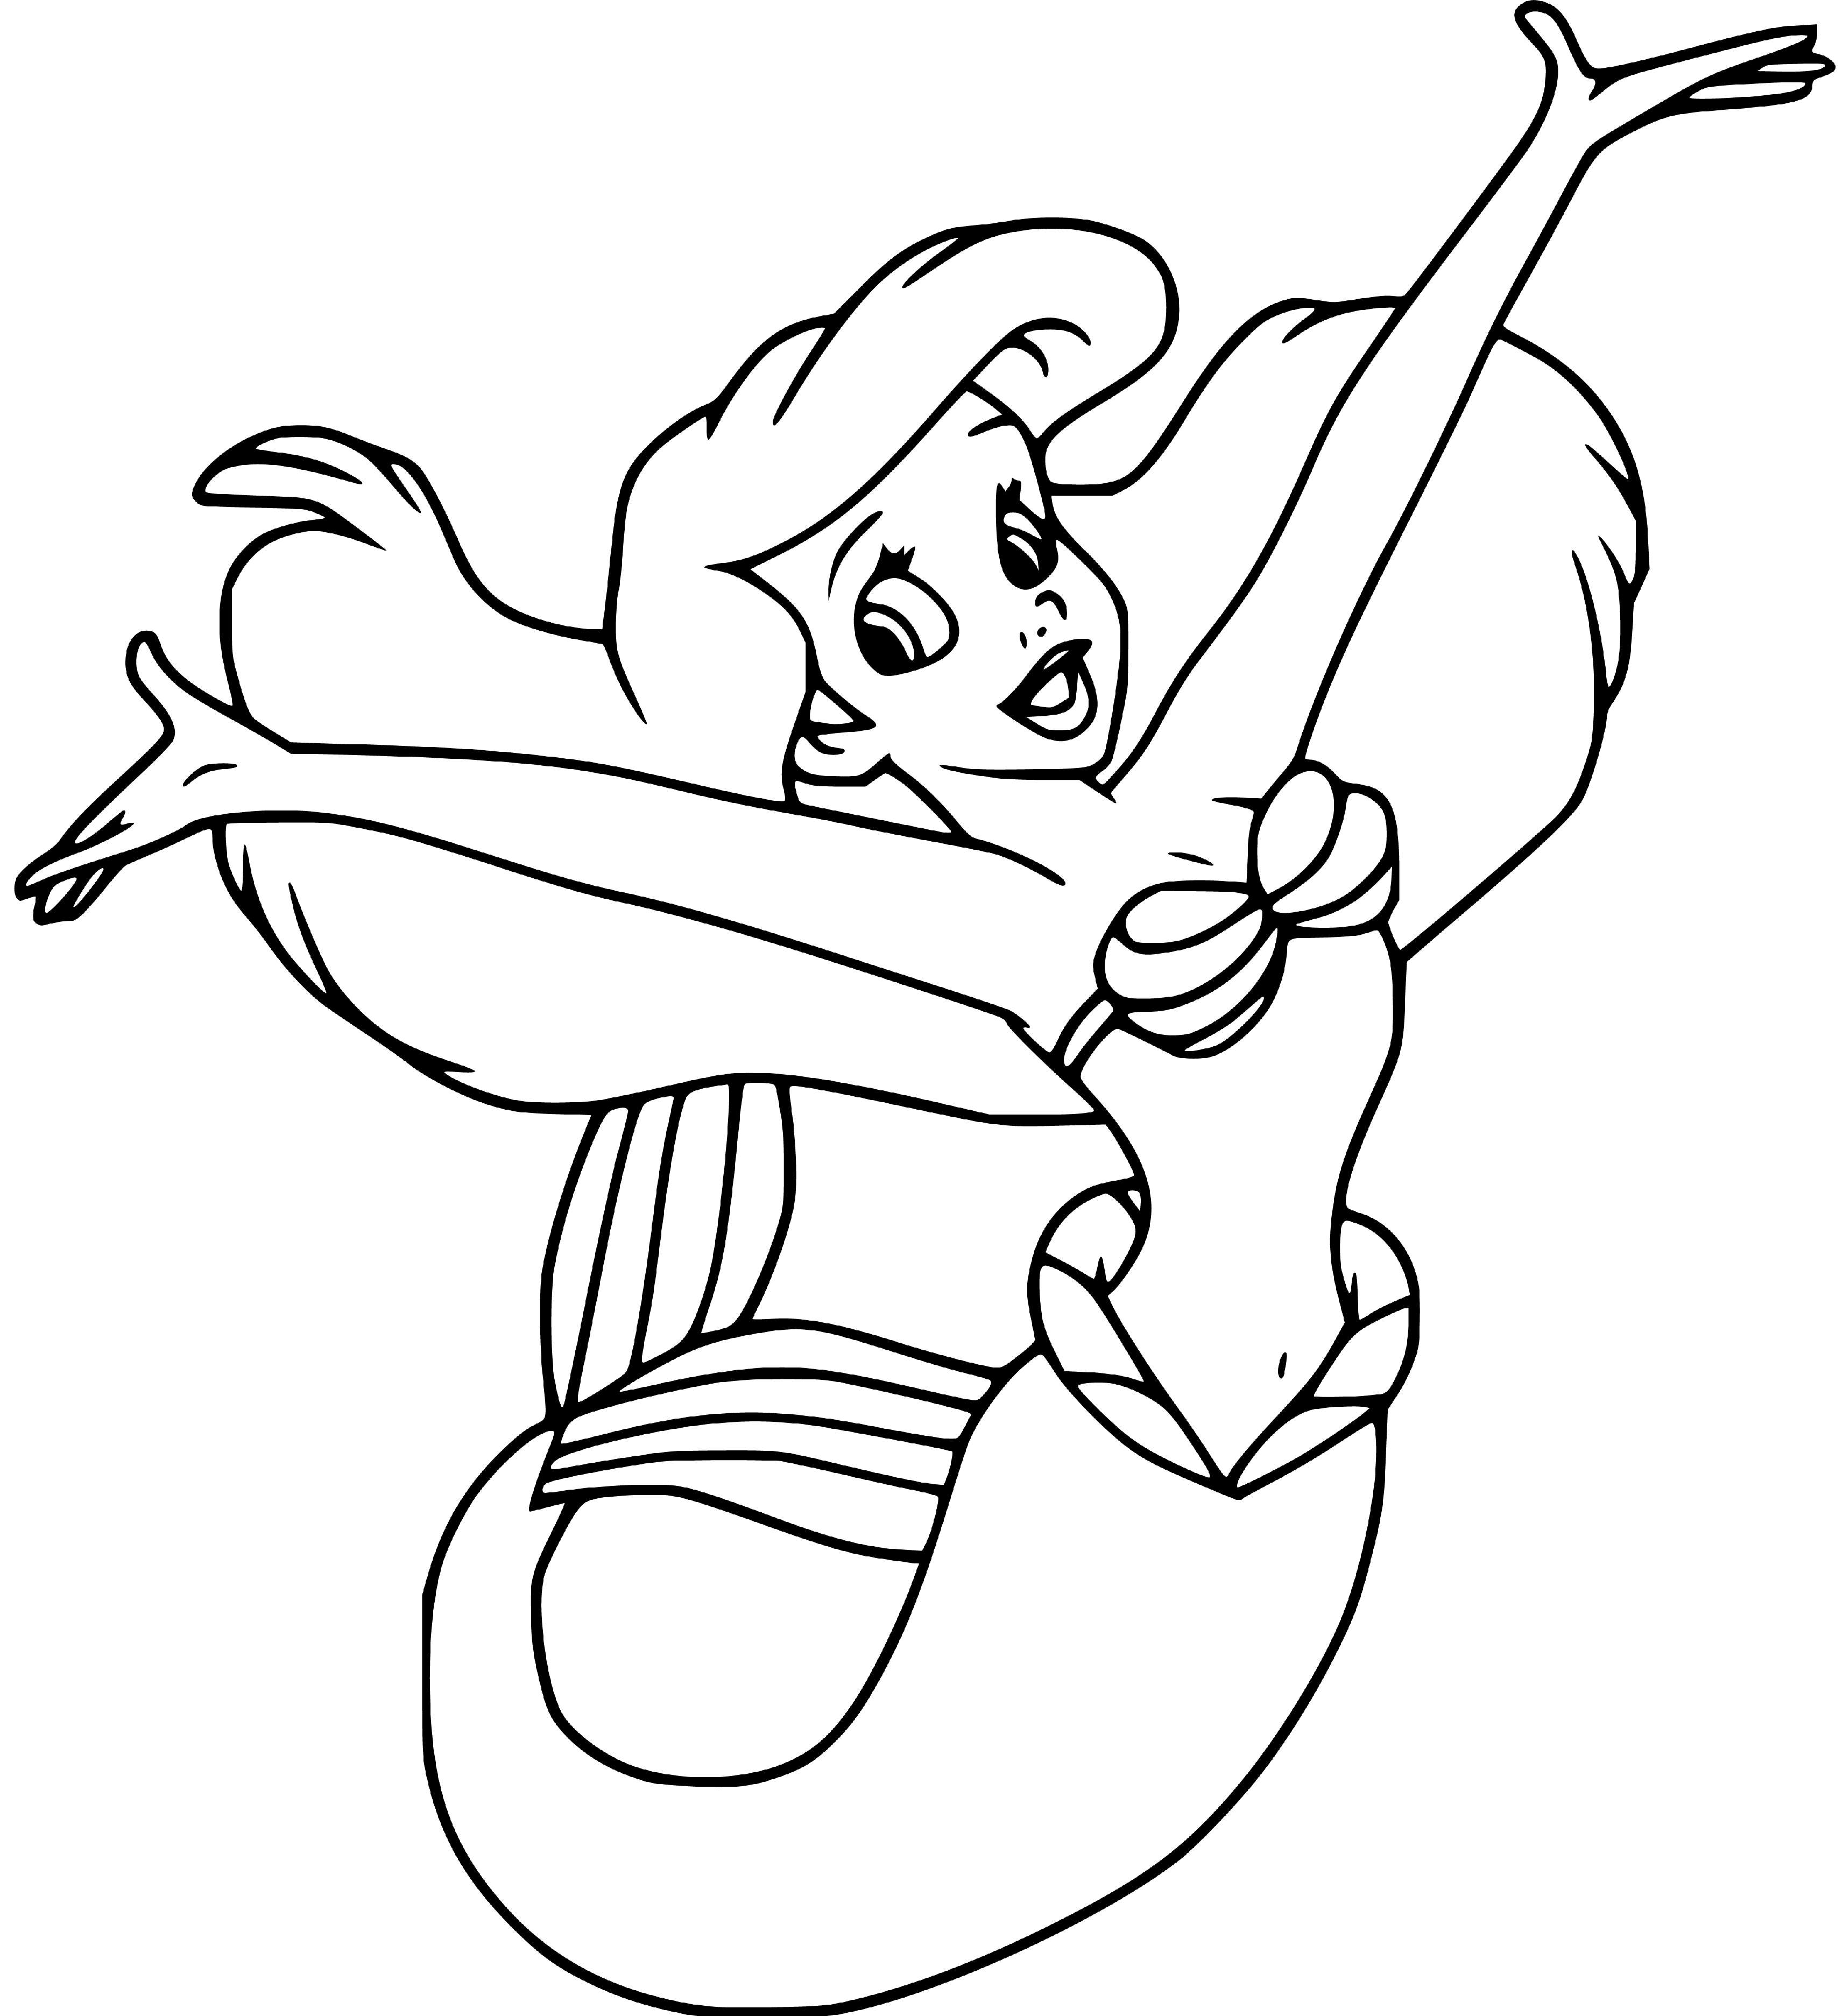 The Little Mermaid Coloring Page 4 kids - SheetalColor.com